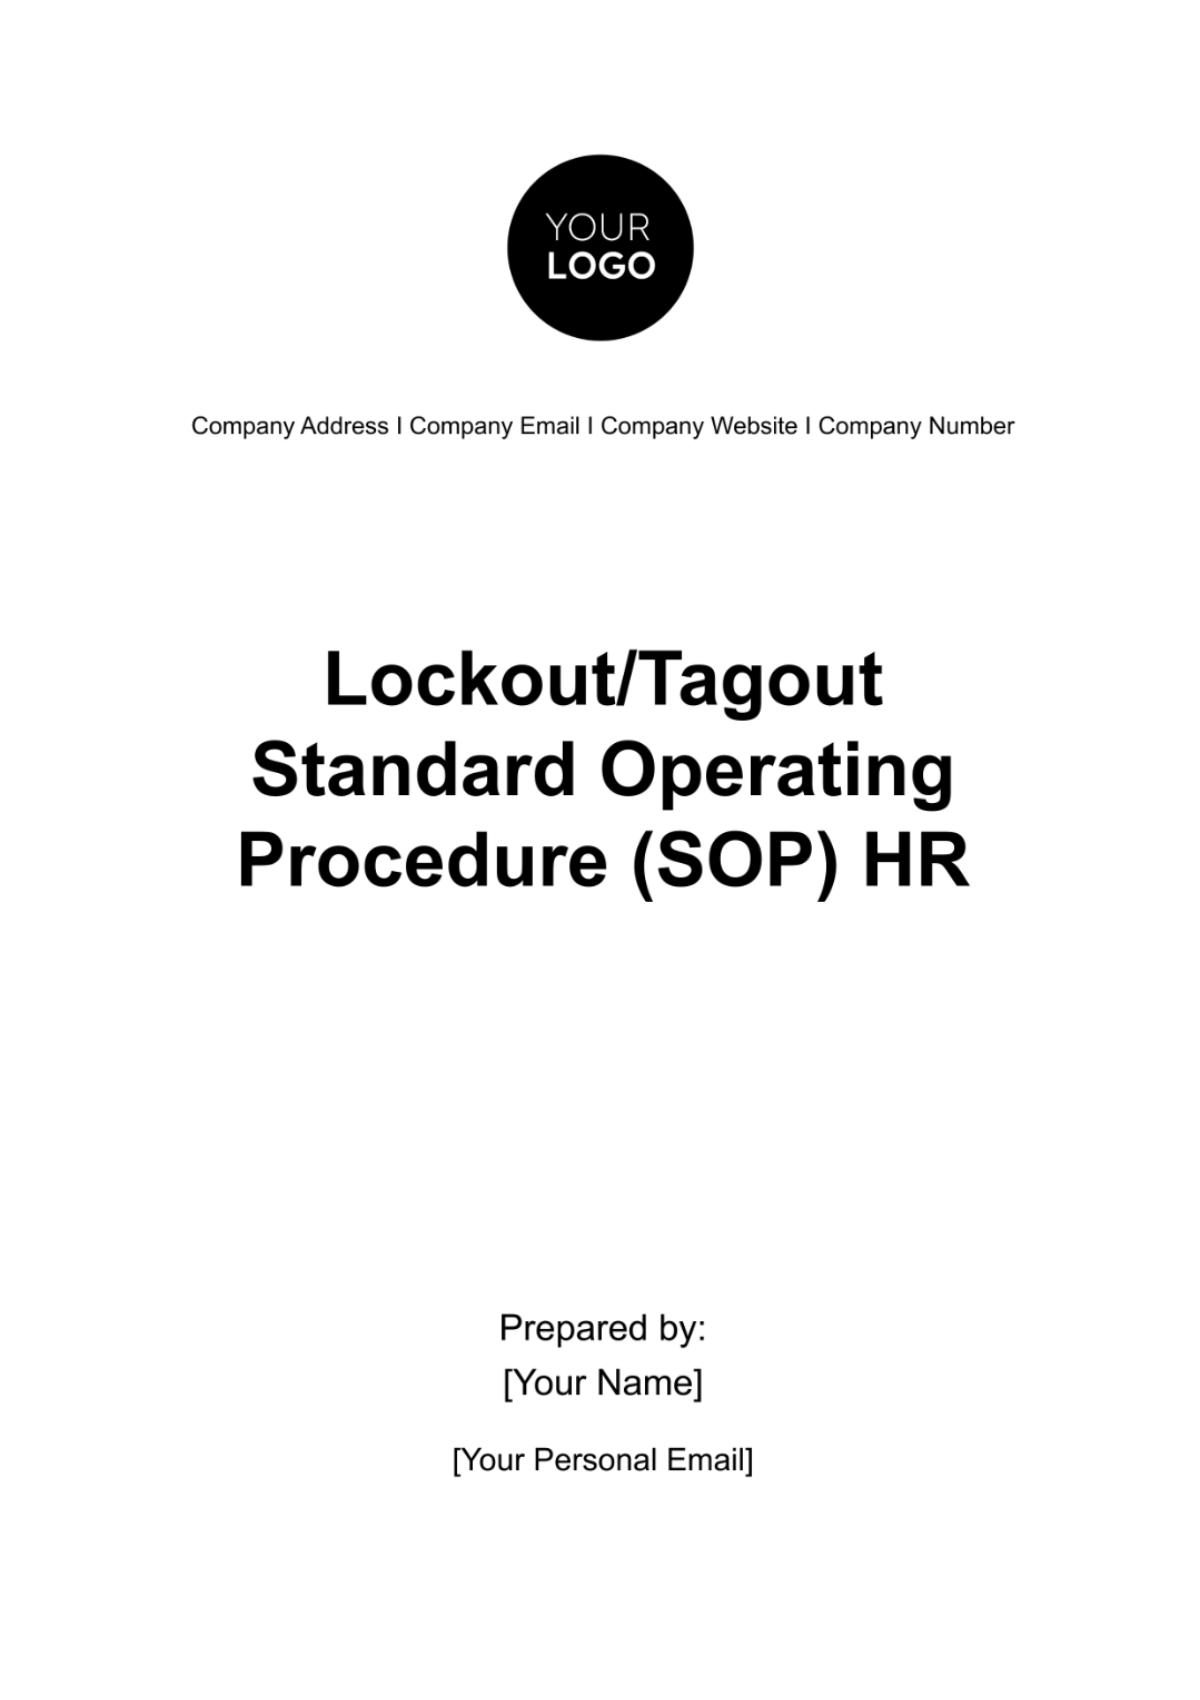 Free Lockout/Tagout Standard Operating Procedure (SOP) HR Template